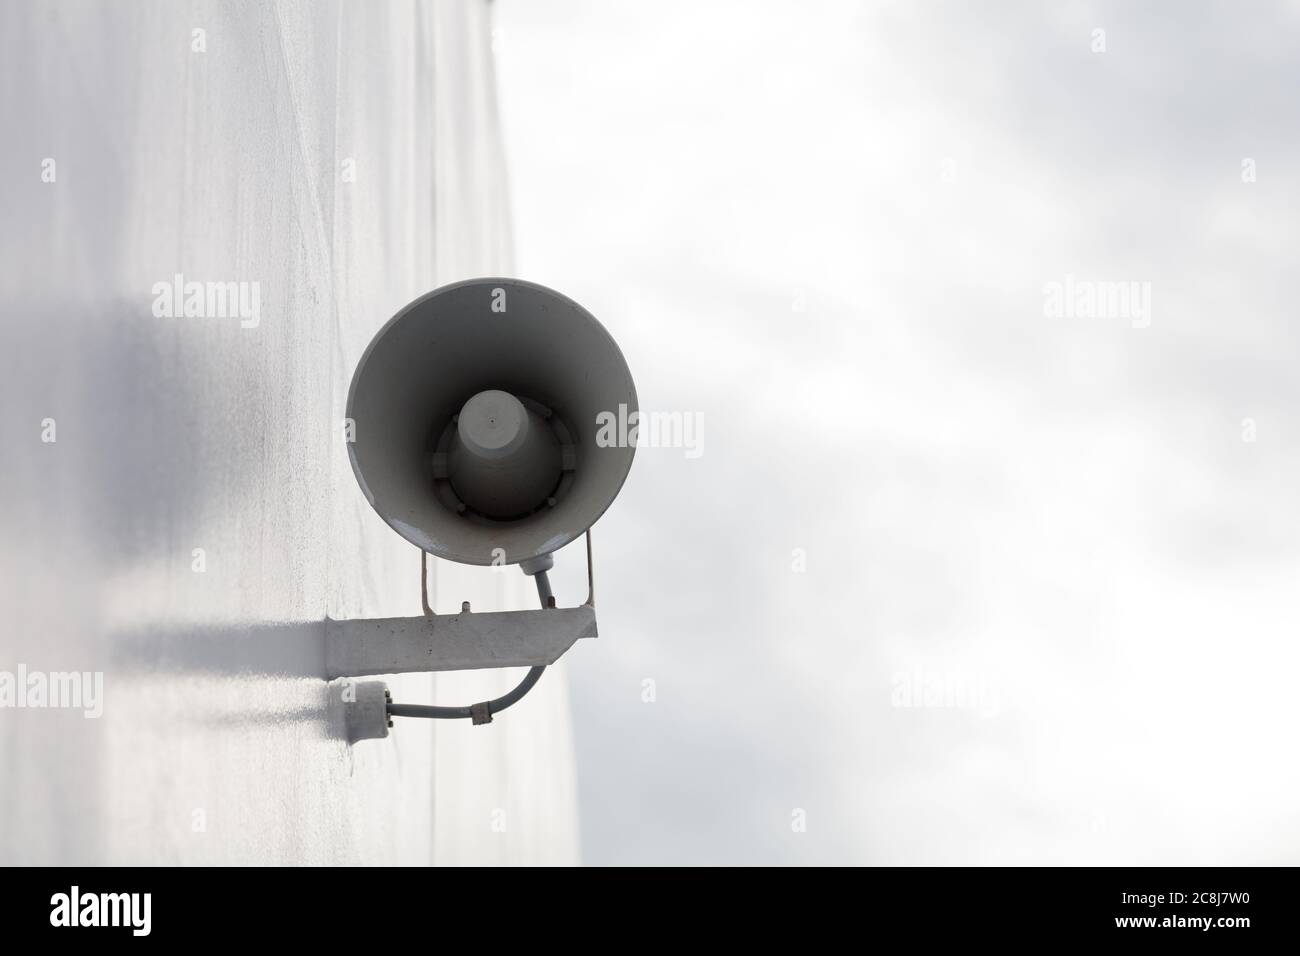 Weißes Megaphon, lauter Lautsprecher in Nahaufnahme. An der Wand hängen.  Hochwertige Fotos Stockfotografie - Alamy